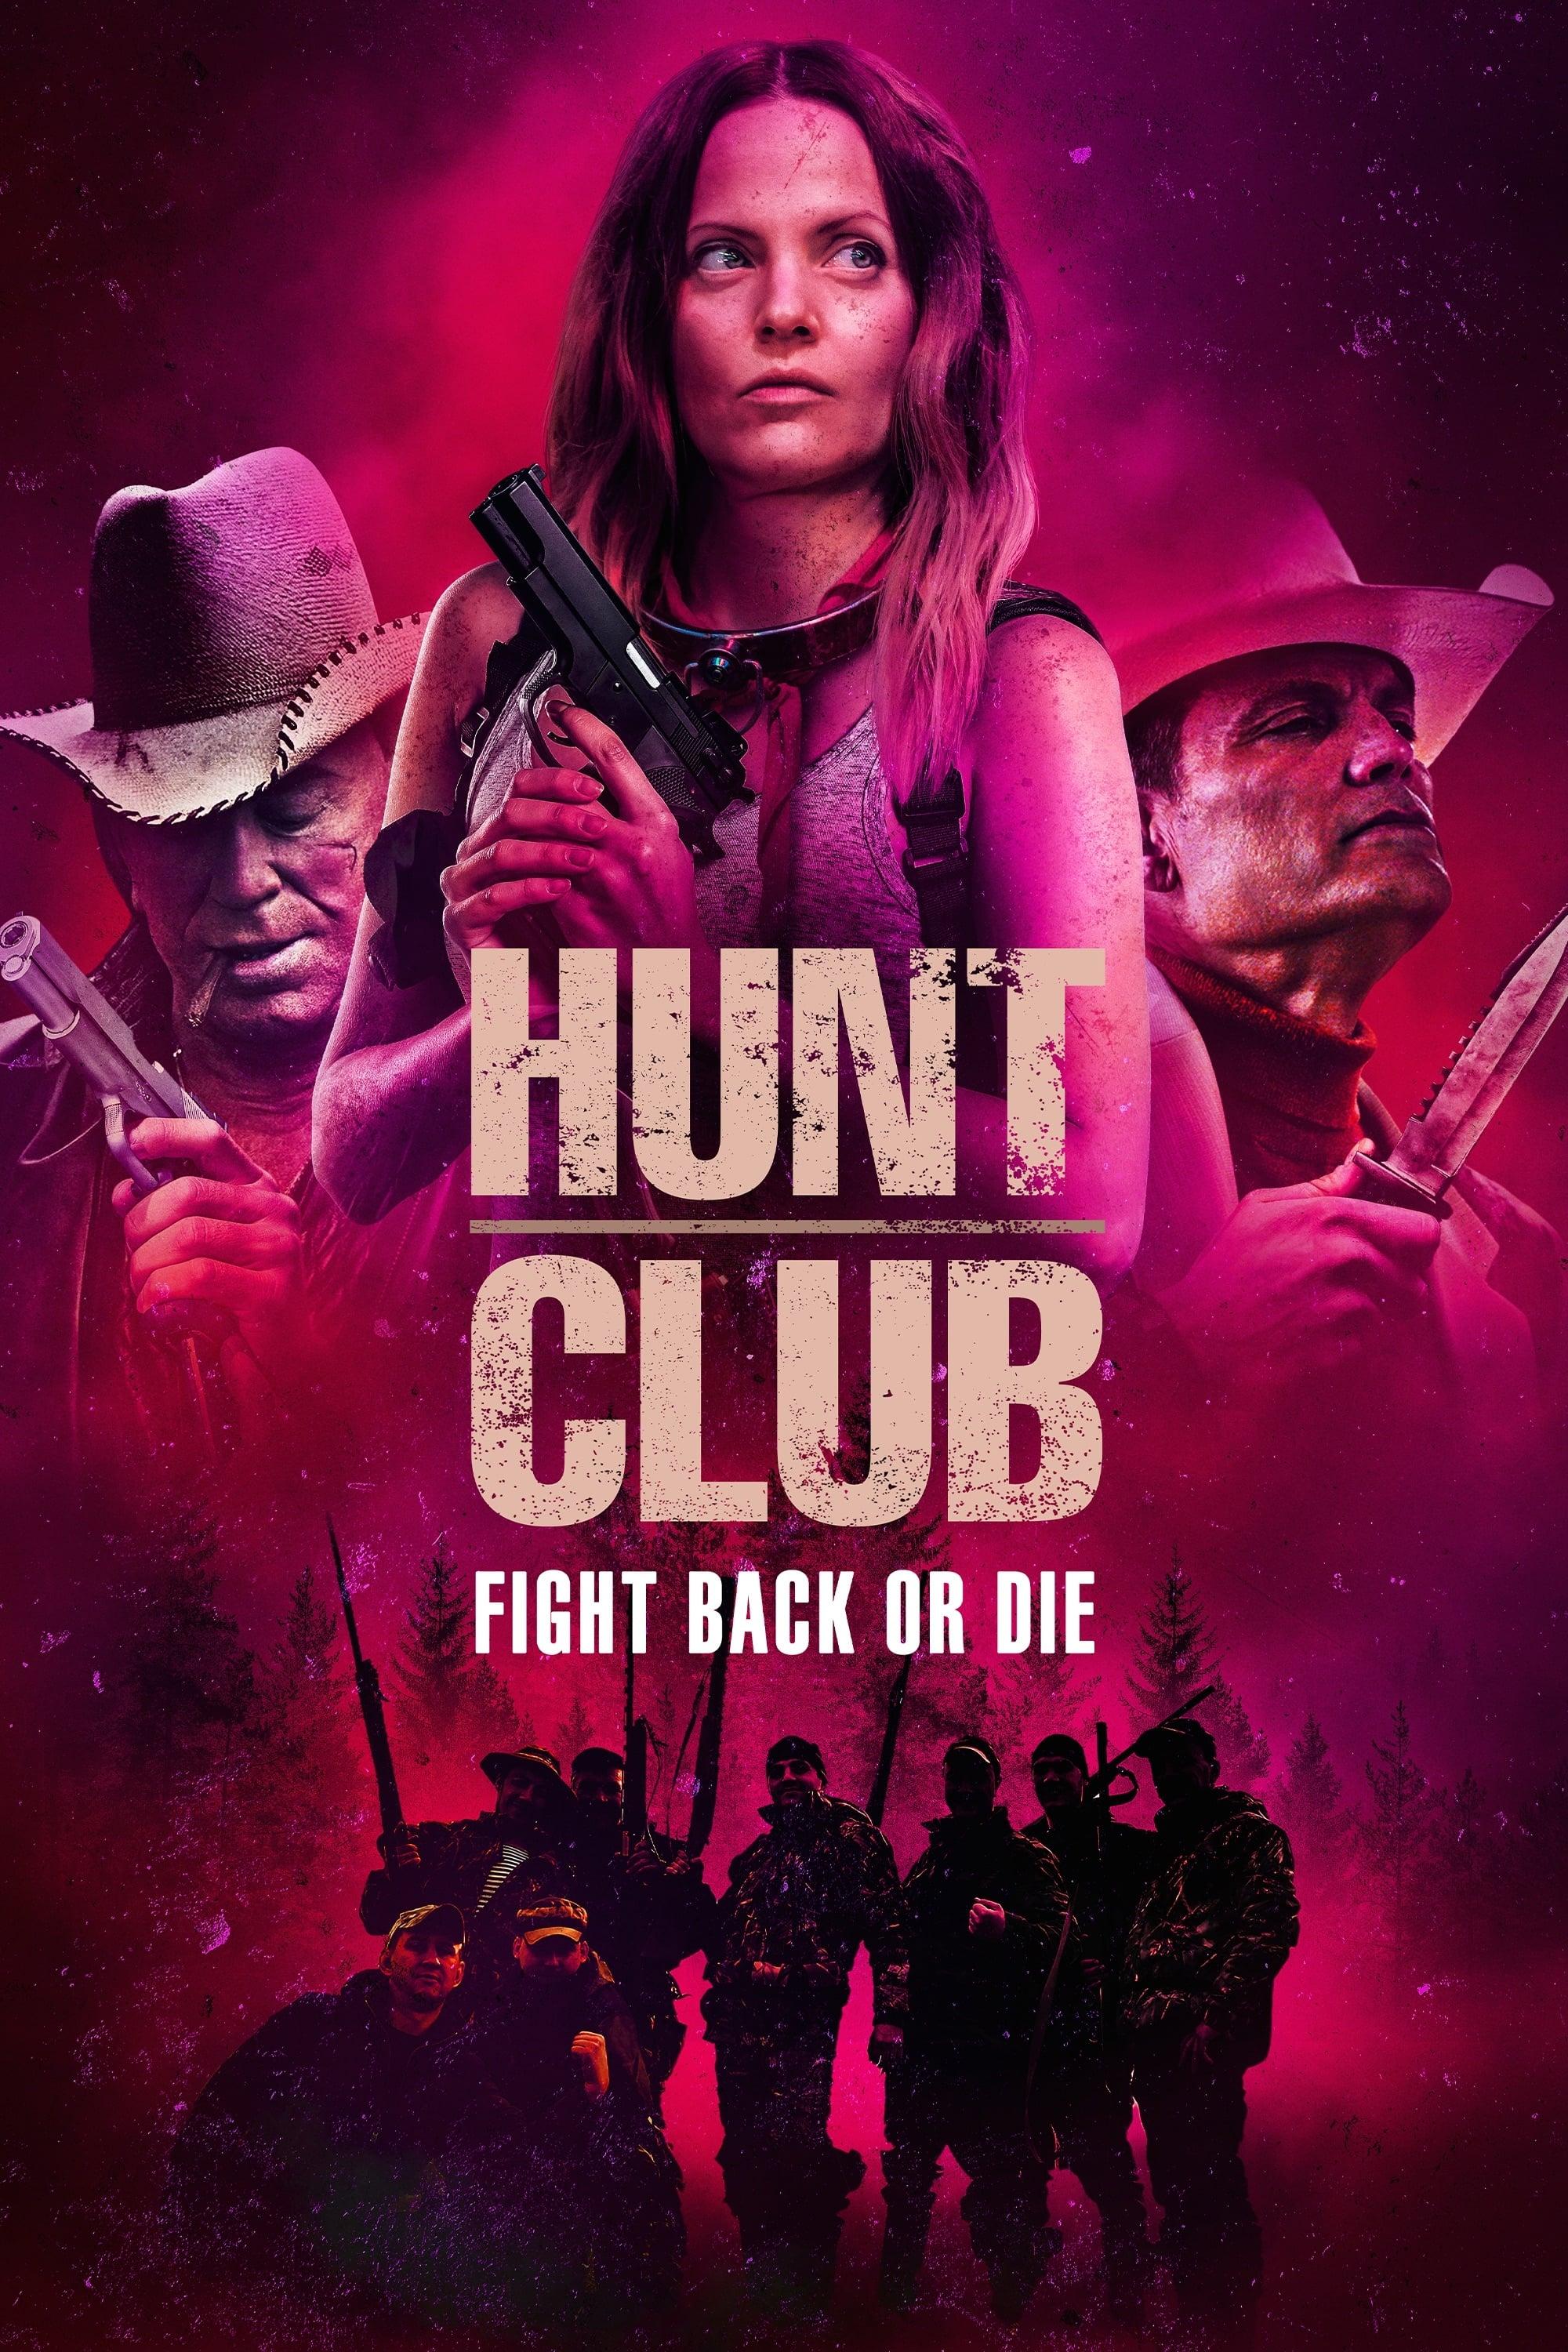 Hunt Club poster